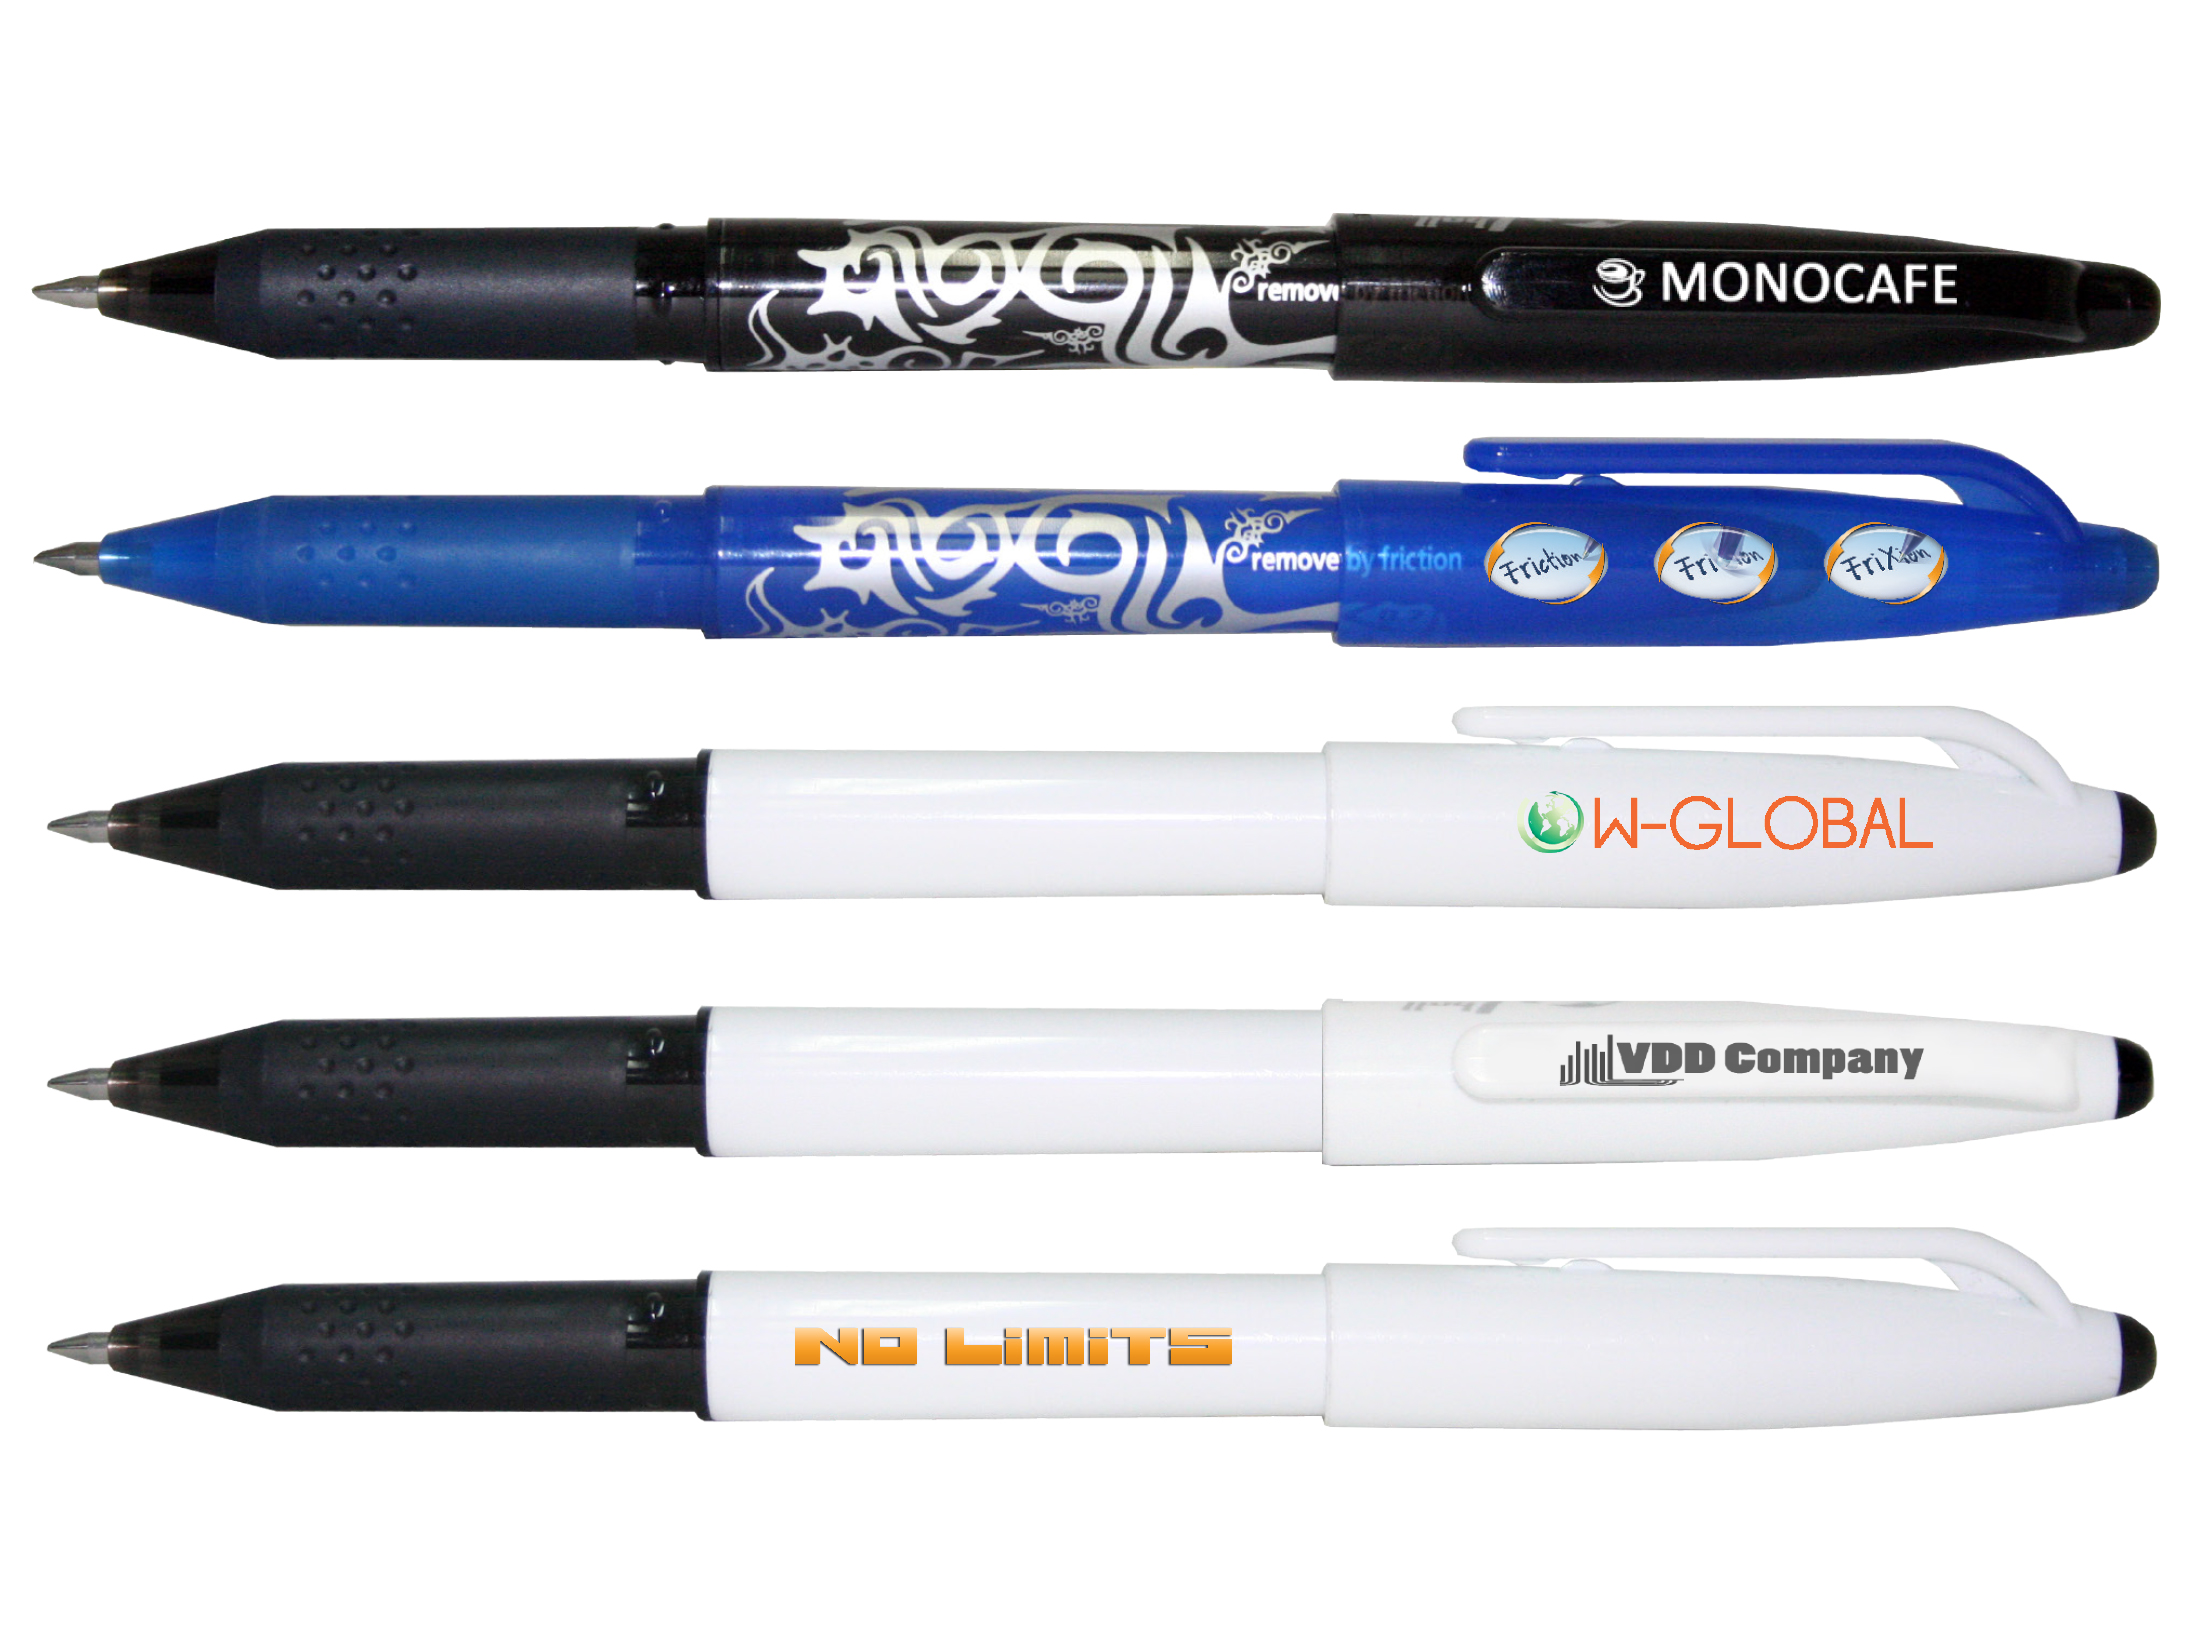 Pilot Frixion Heat/Friction Erasable Rollerball Pen FR7 - Medium Line 0.7mm  Tip Nib - Wallet Pack of 3 (Black)